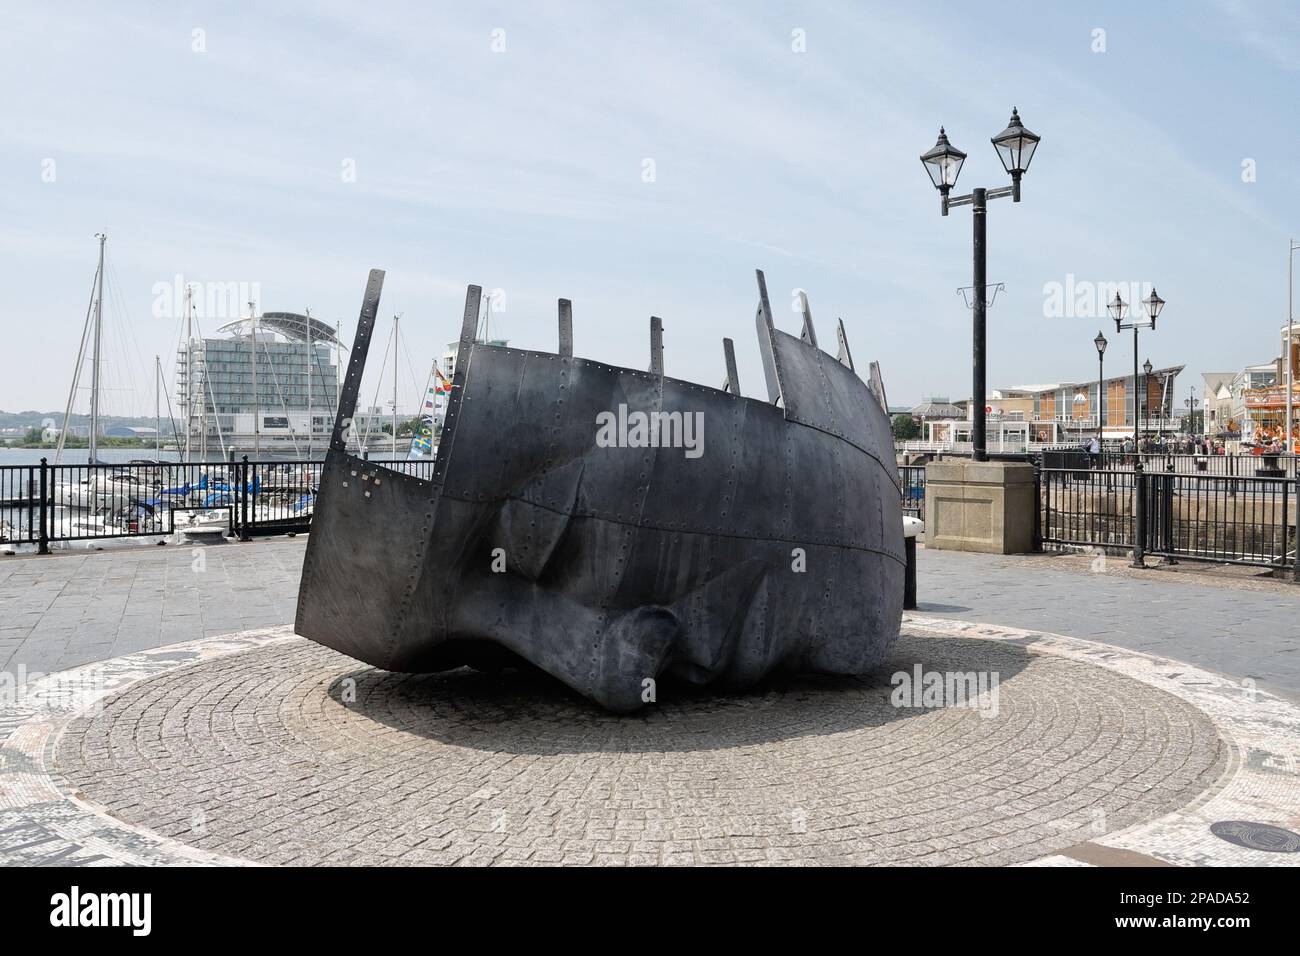 Merchant Seafarers War Memorial Sculpture at Mermaid Quay in Cardiff Bay Wales, waterfront art Stock Photo